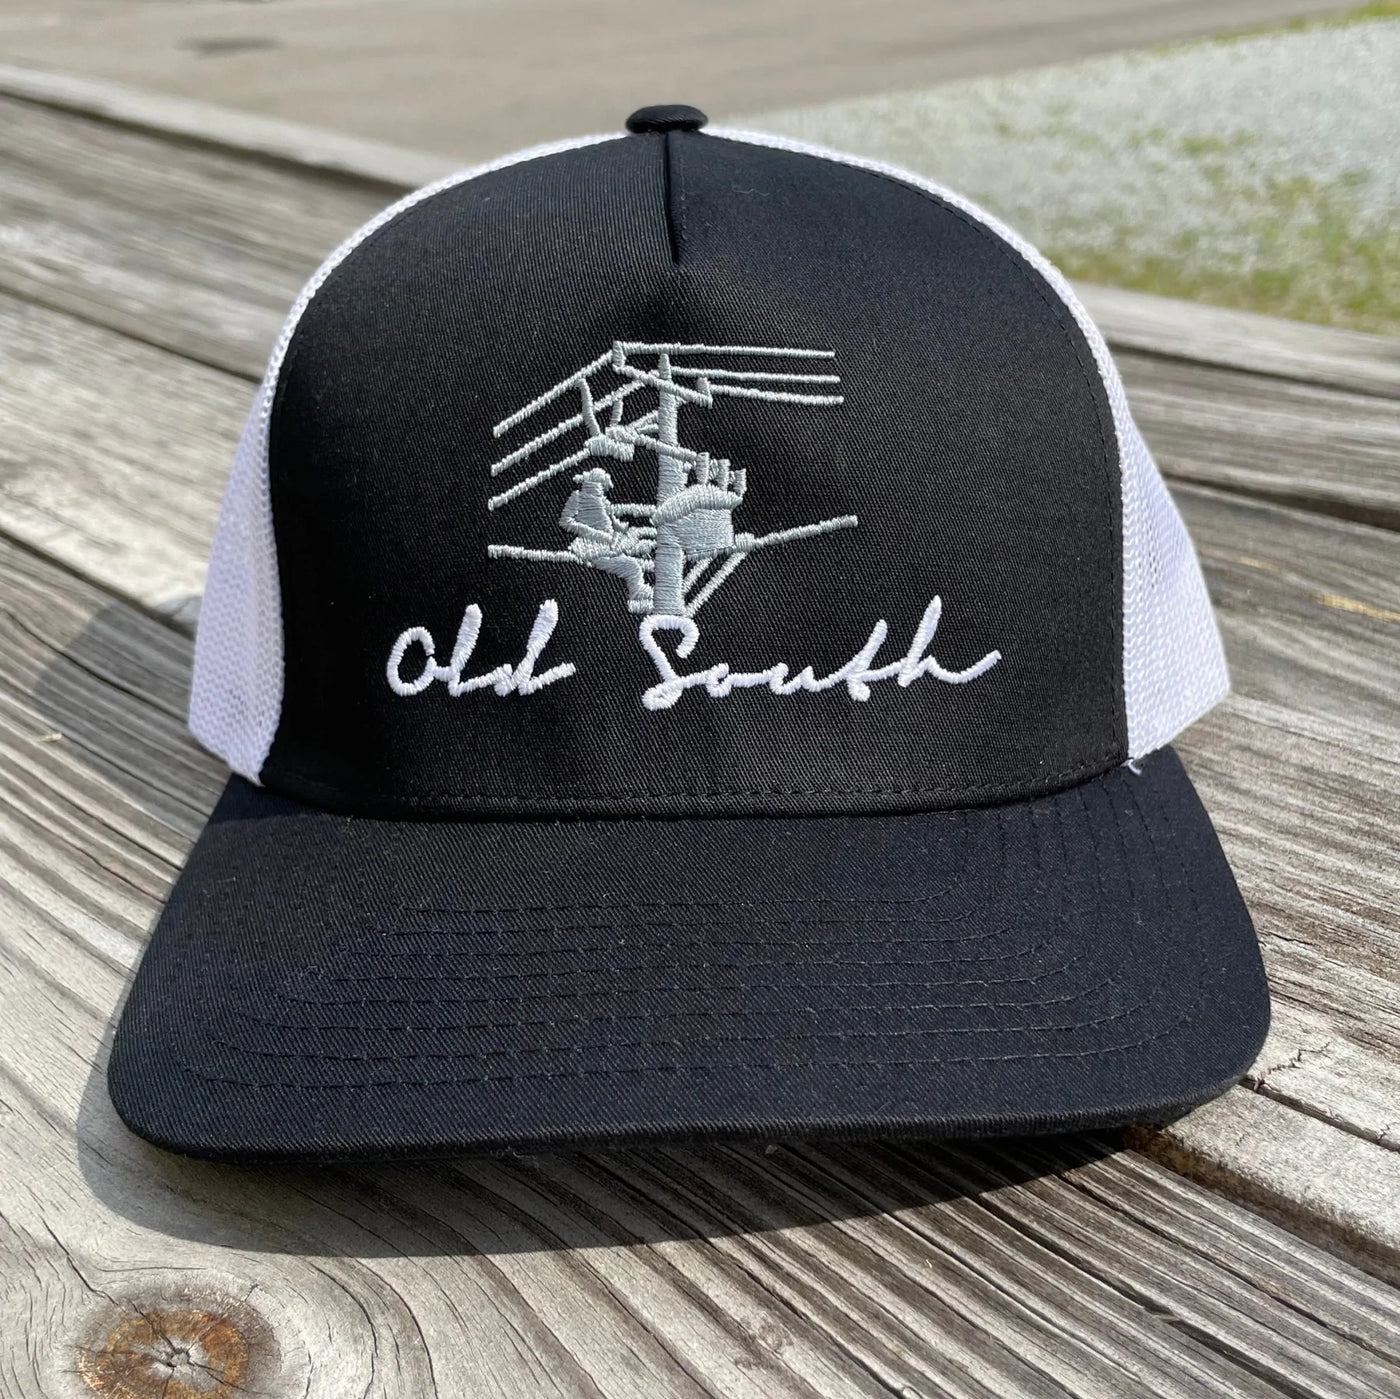 Old South Apparel Lineman Trucker Hat Black/White